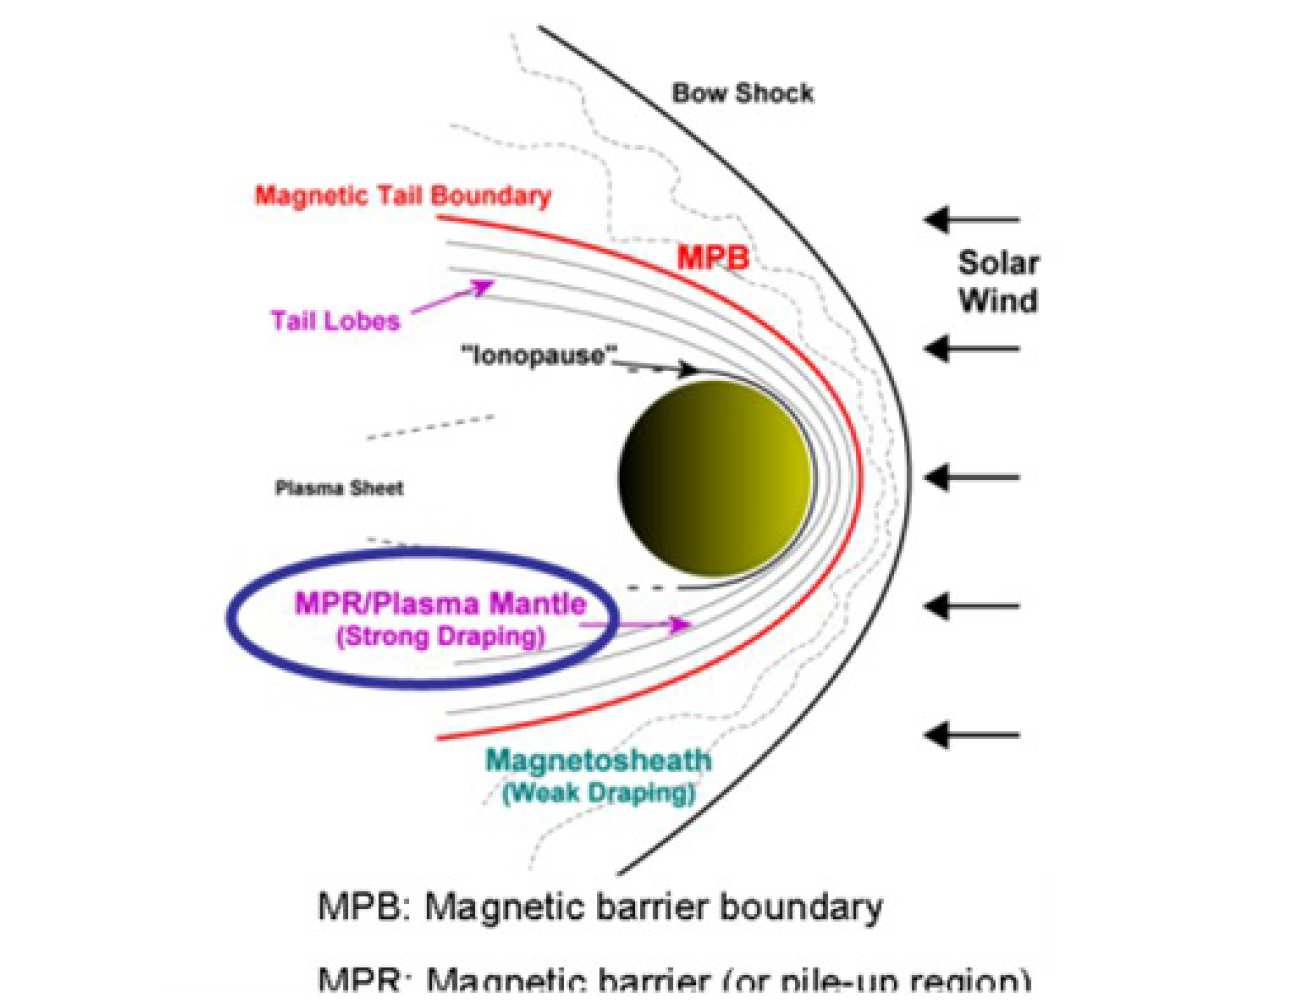 Magnetized Environment of Venus